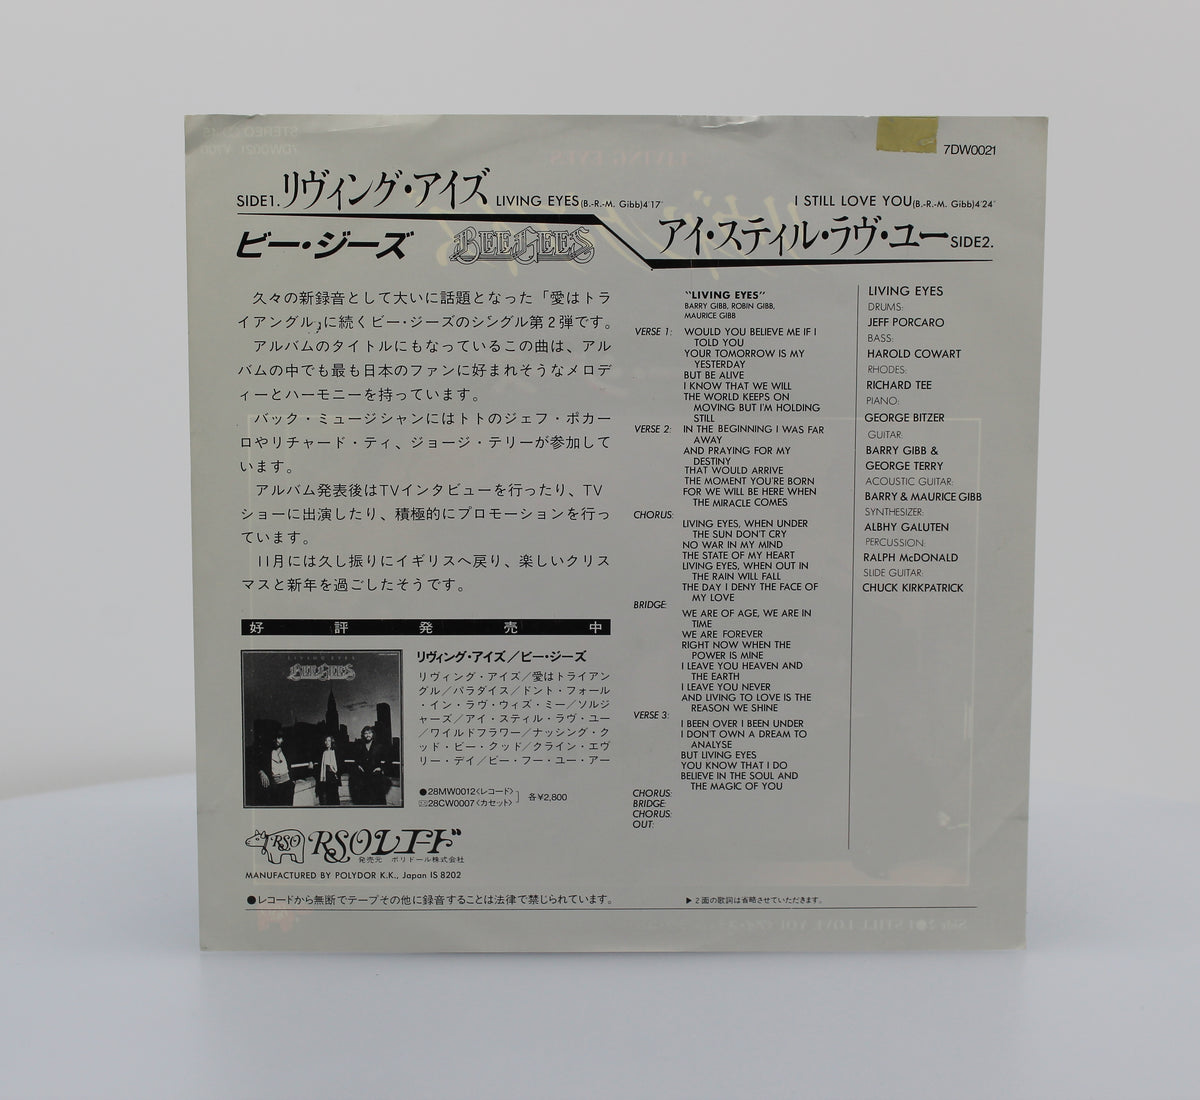 Bee Gees - Living Eyes, Vinyl, 7&quot; 45rpm, Single, Jpan 1982